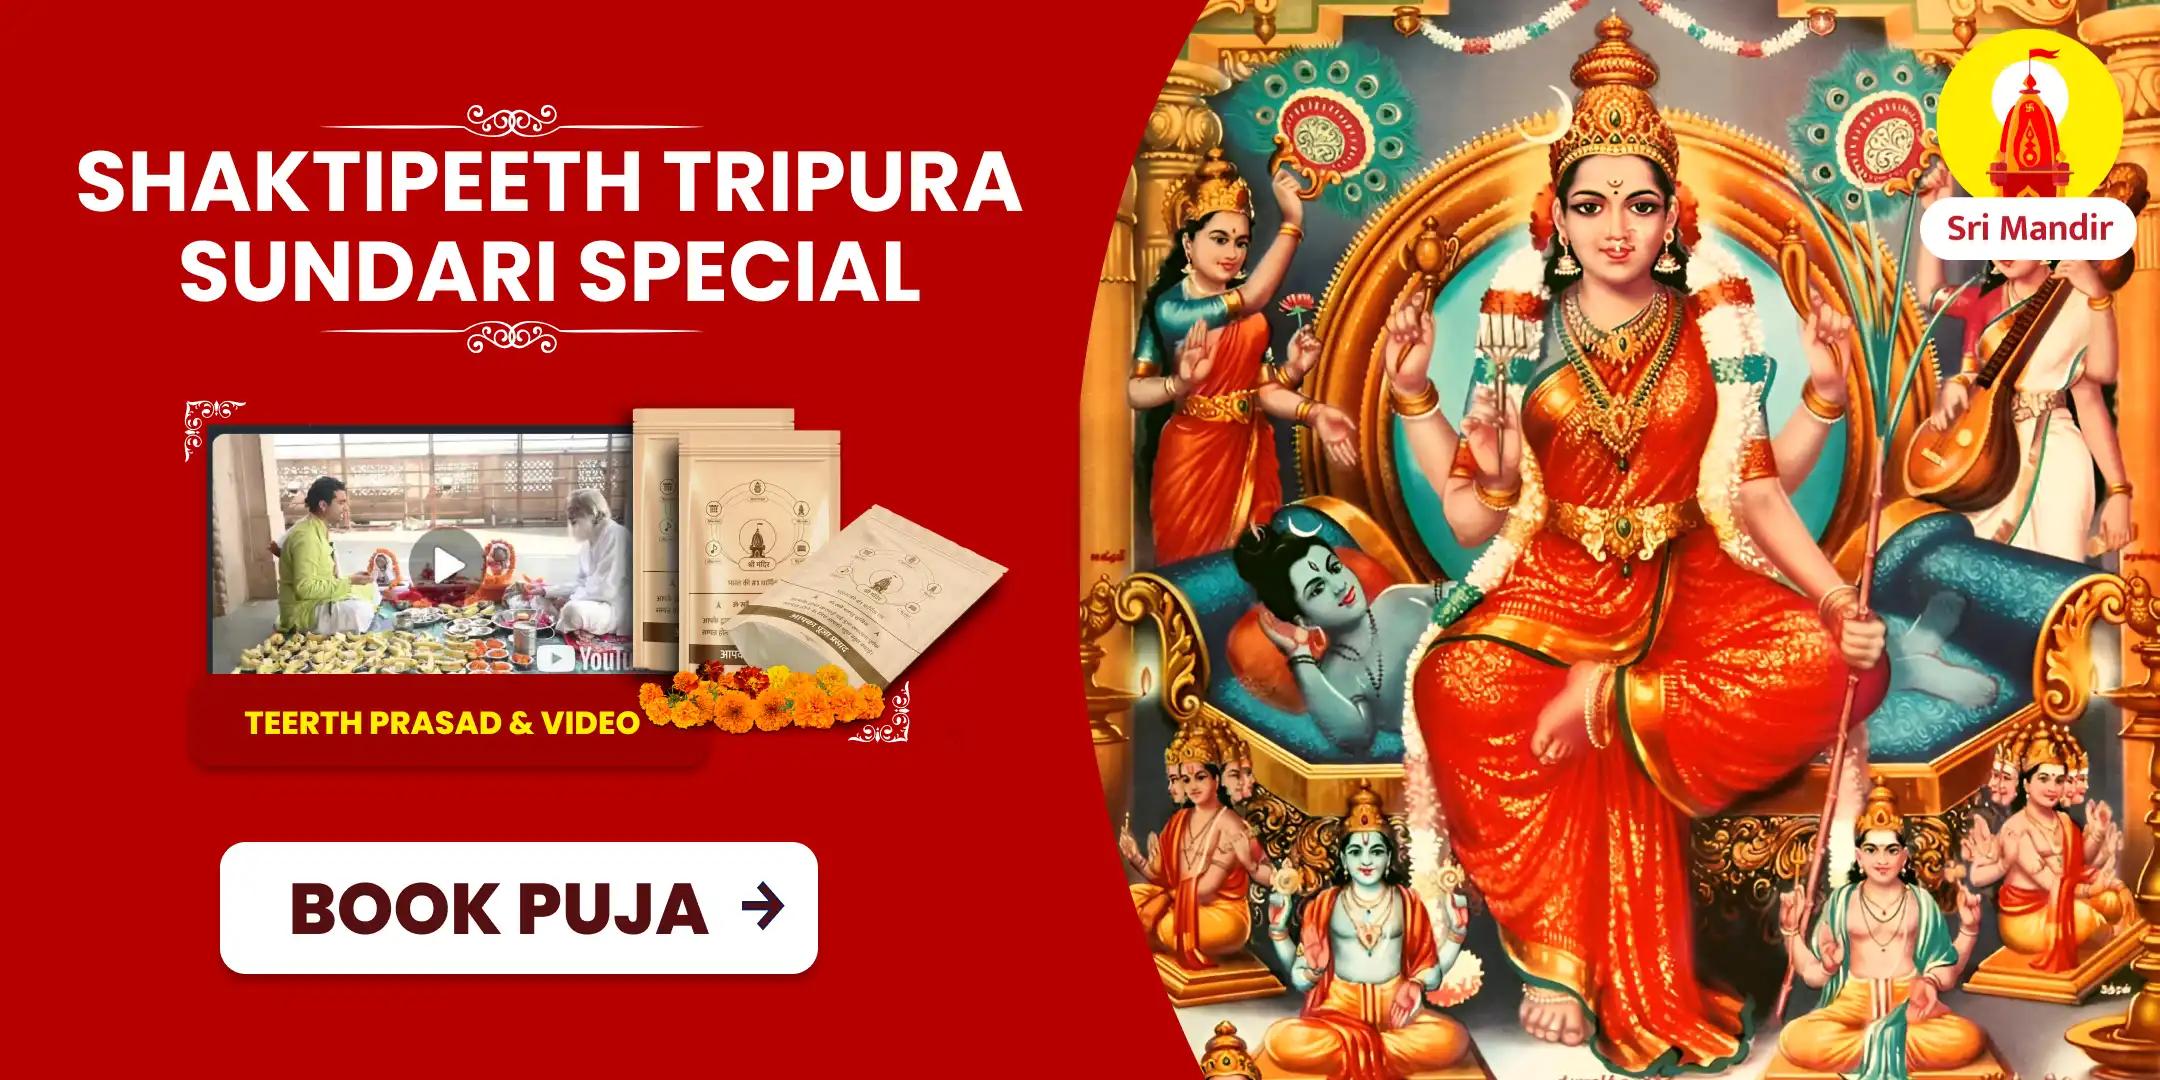 Shaktipeeth Saptami Special Maa Tripura Sundari Tantrokta Mahayagya for Material Luxuries and Protection from Negative Energies